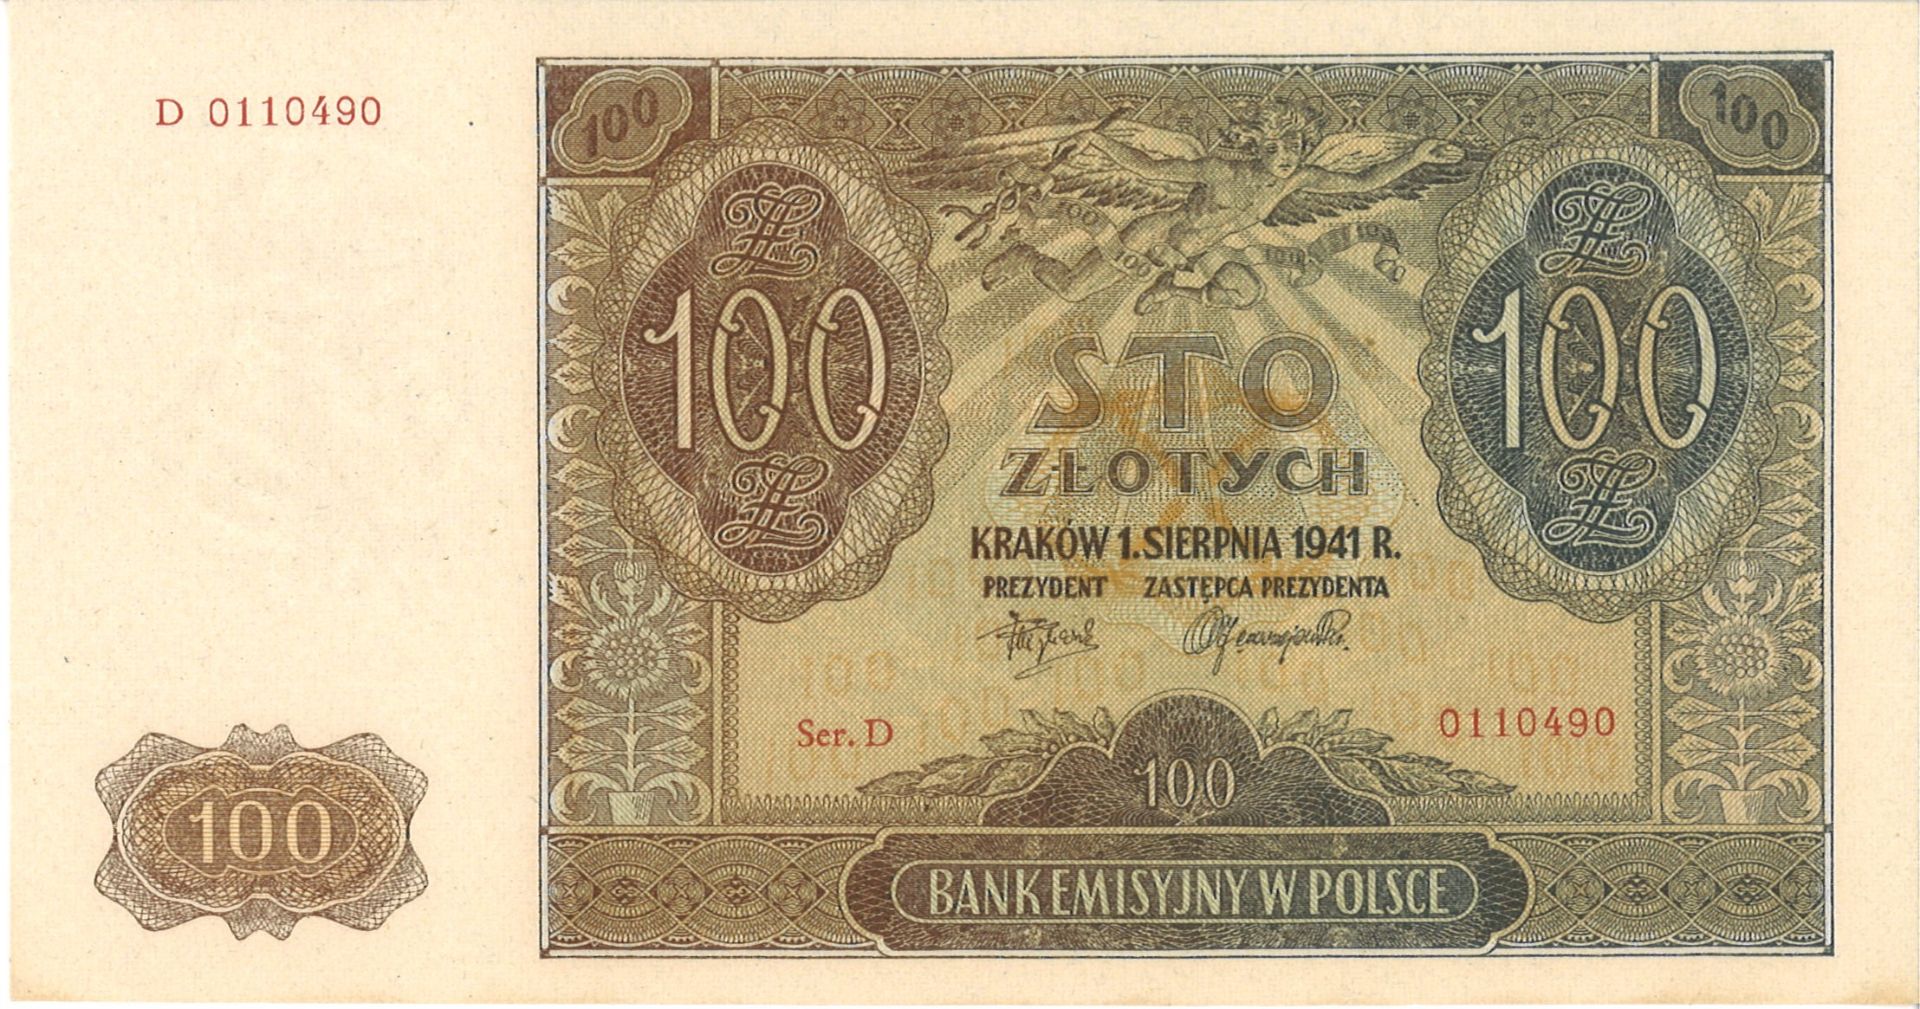 Polen, 100 Zloytch 1941, Pick # 103 unc - Image 2 of 2